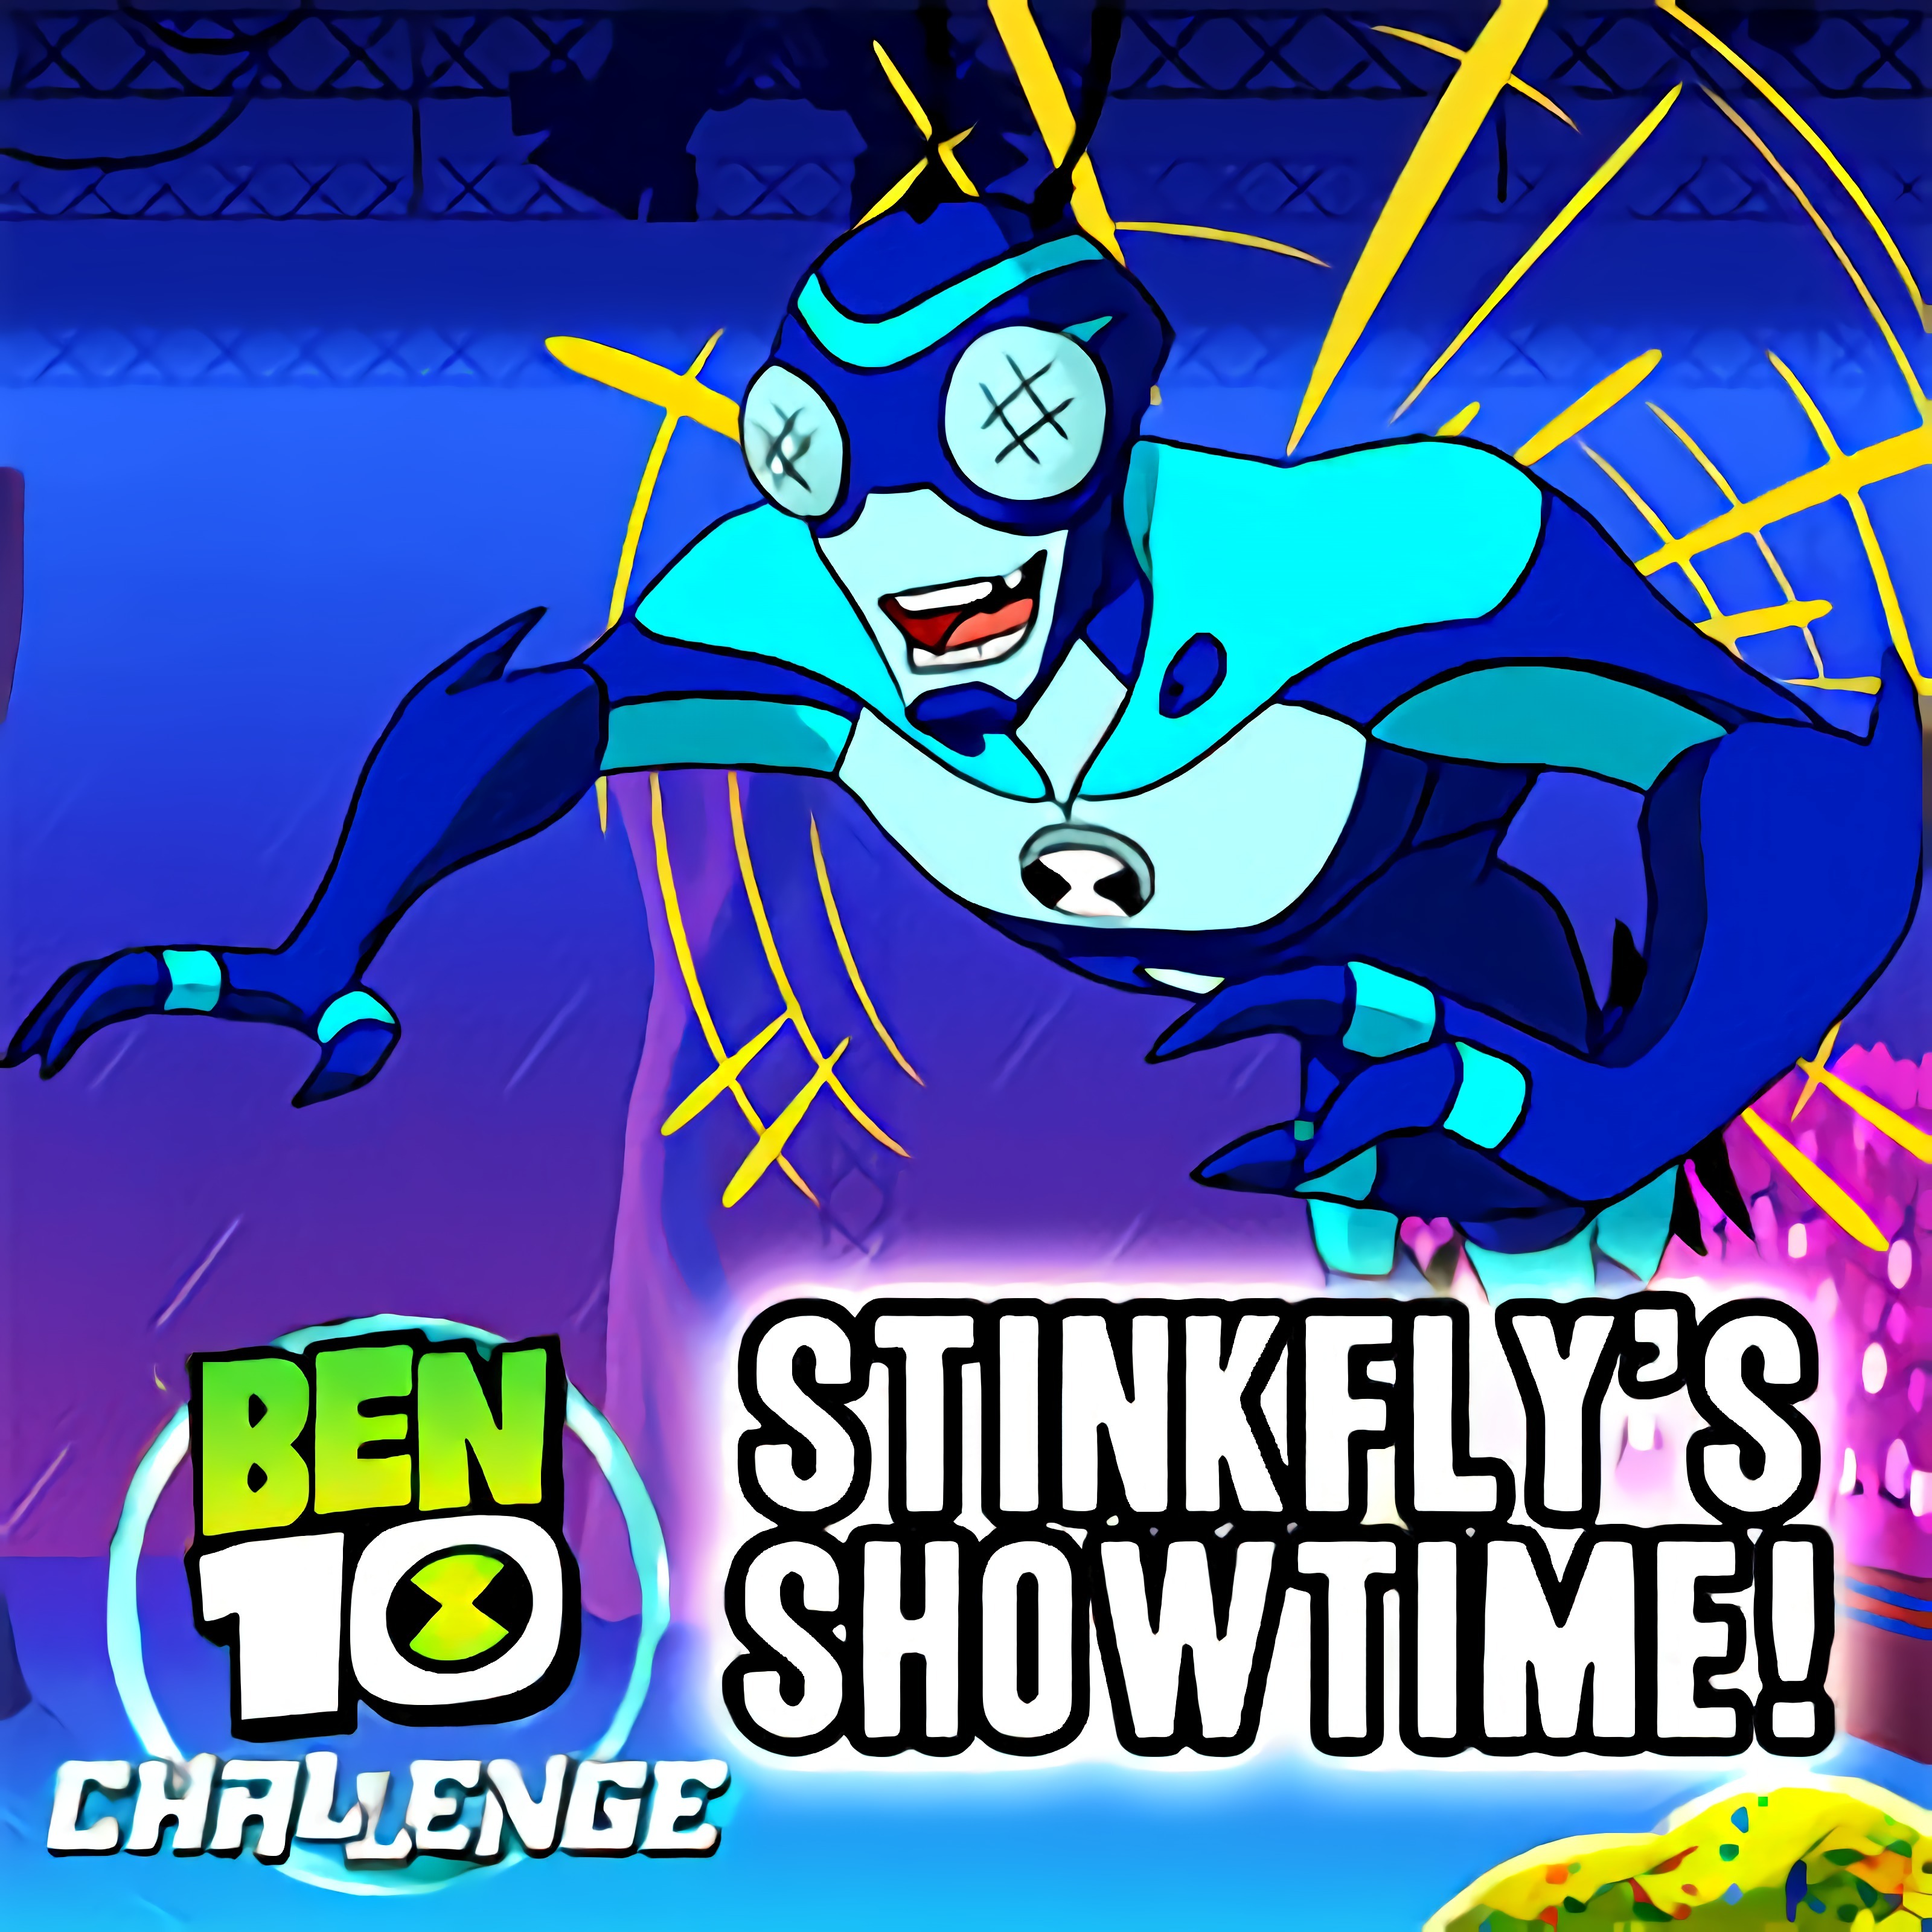 Stinkfly Showtime - Ben 10